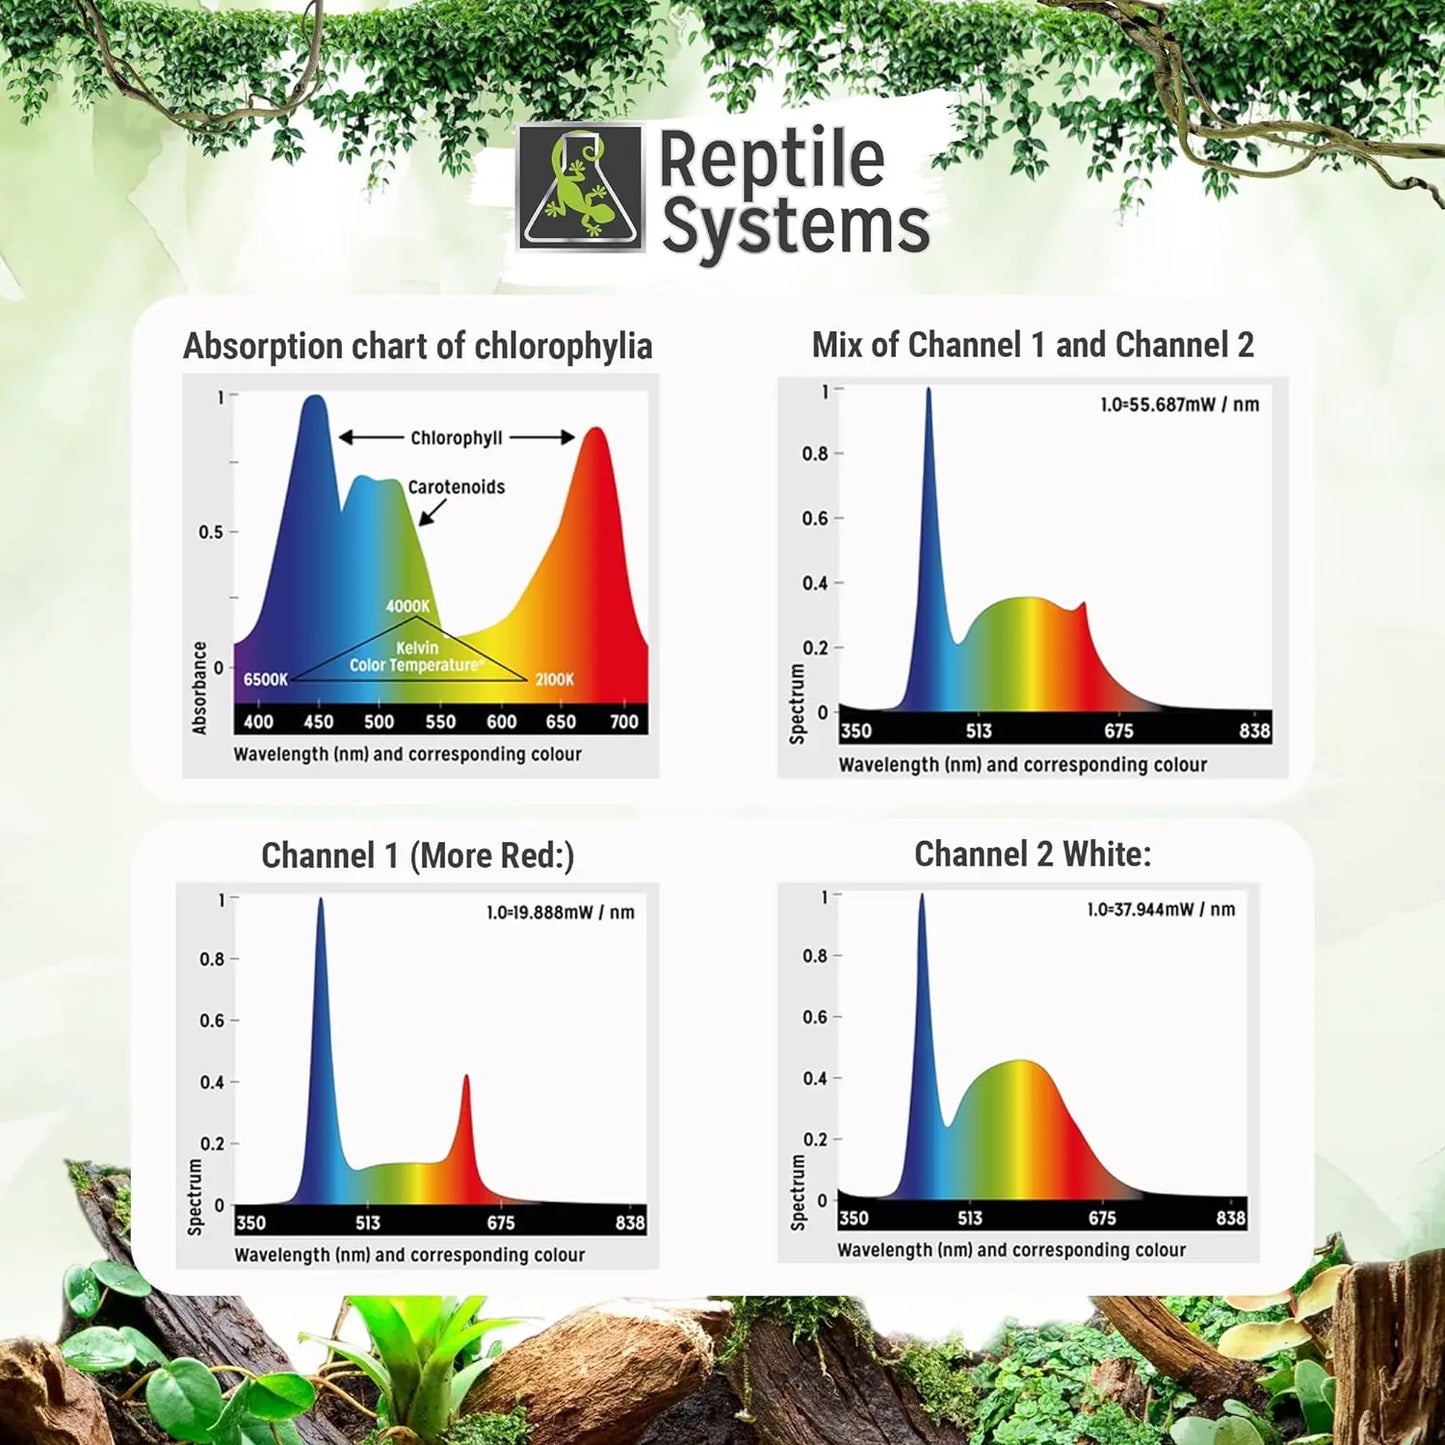 Reptile Systems Proten LED Light Bar Terrarium Vivariums Plant Lamp Reptile Systems